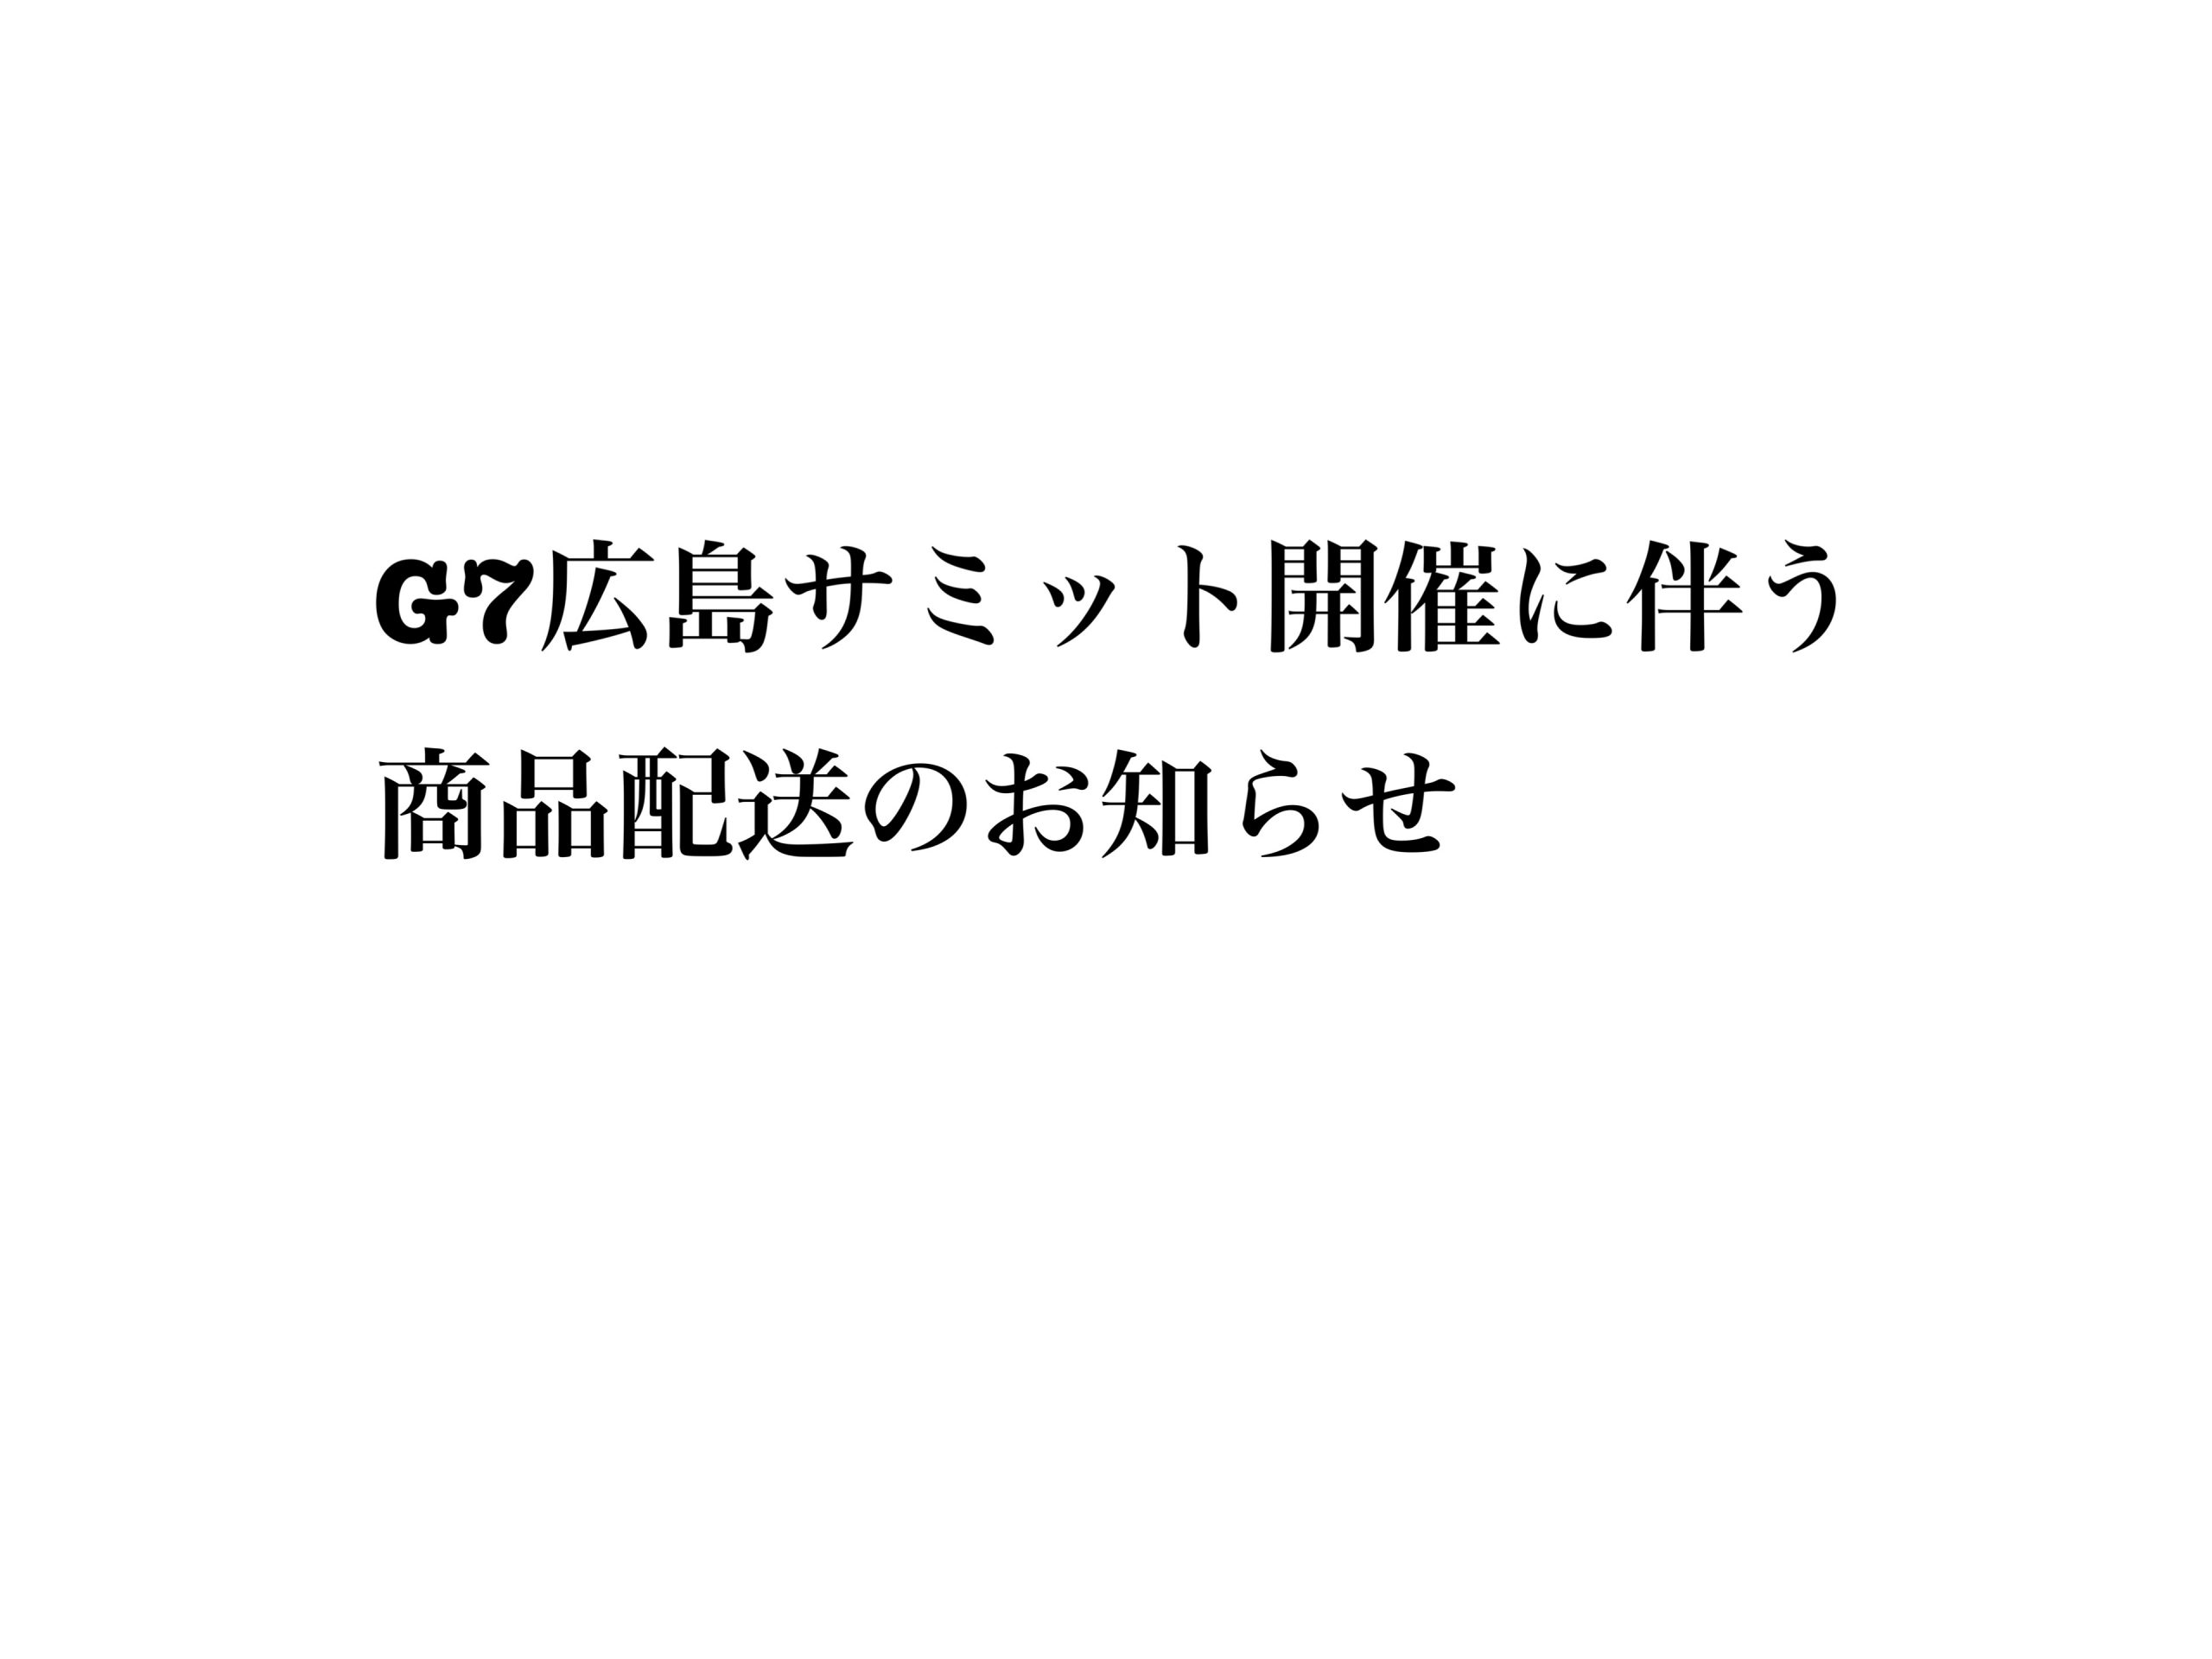 G7広島サミット開催に伴う、商品配送のお知らせ